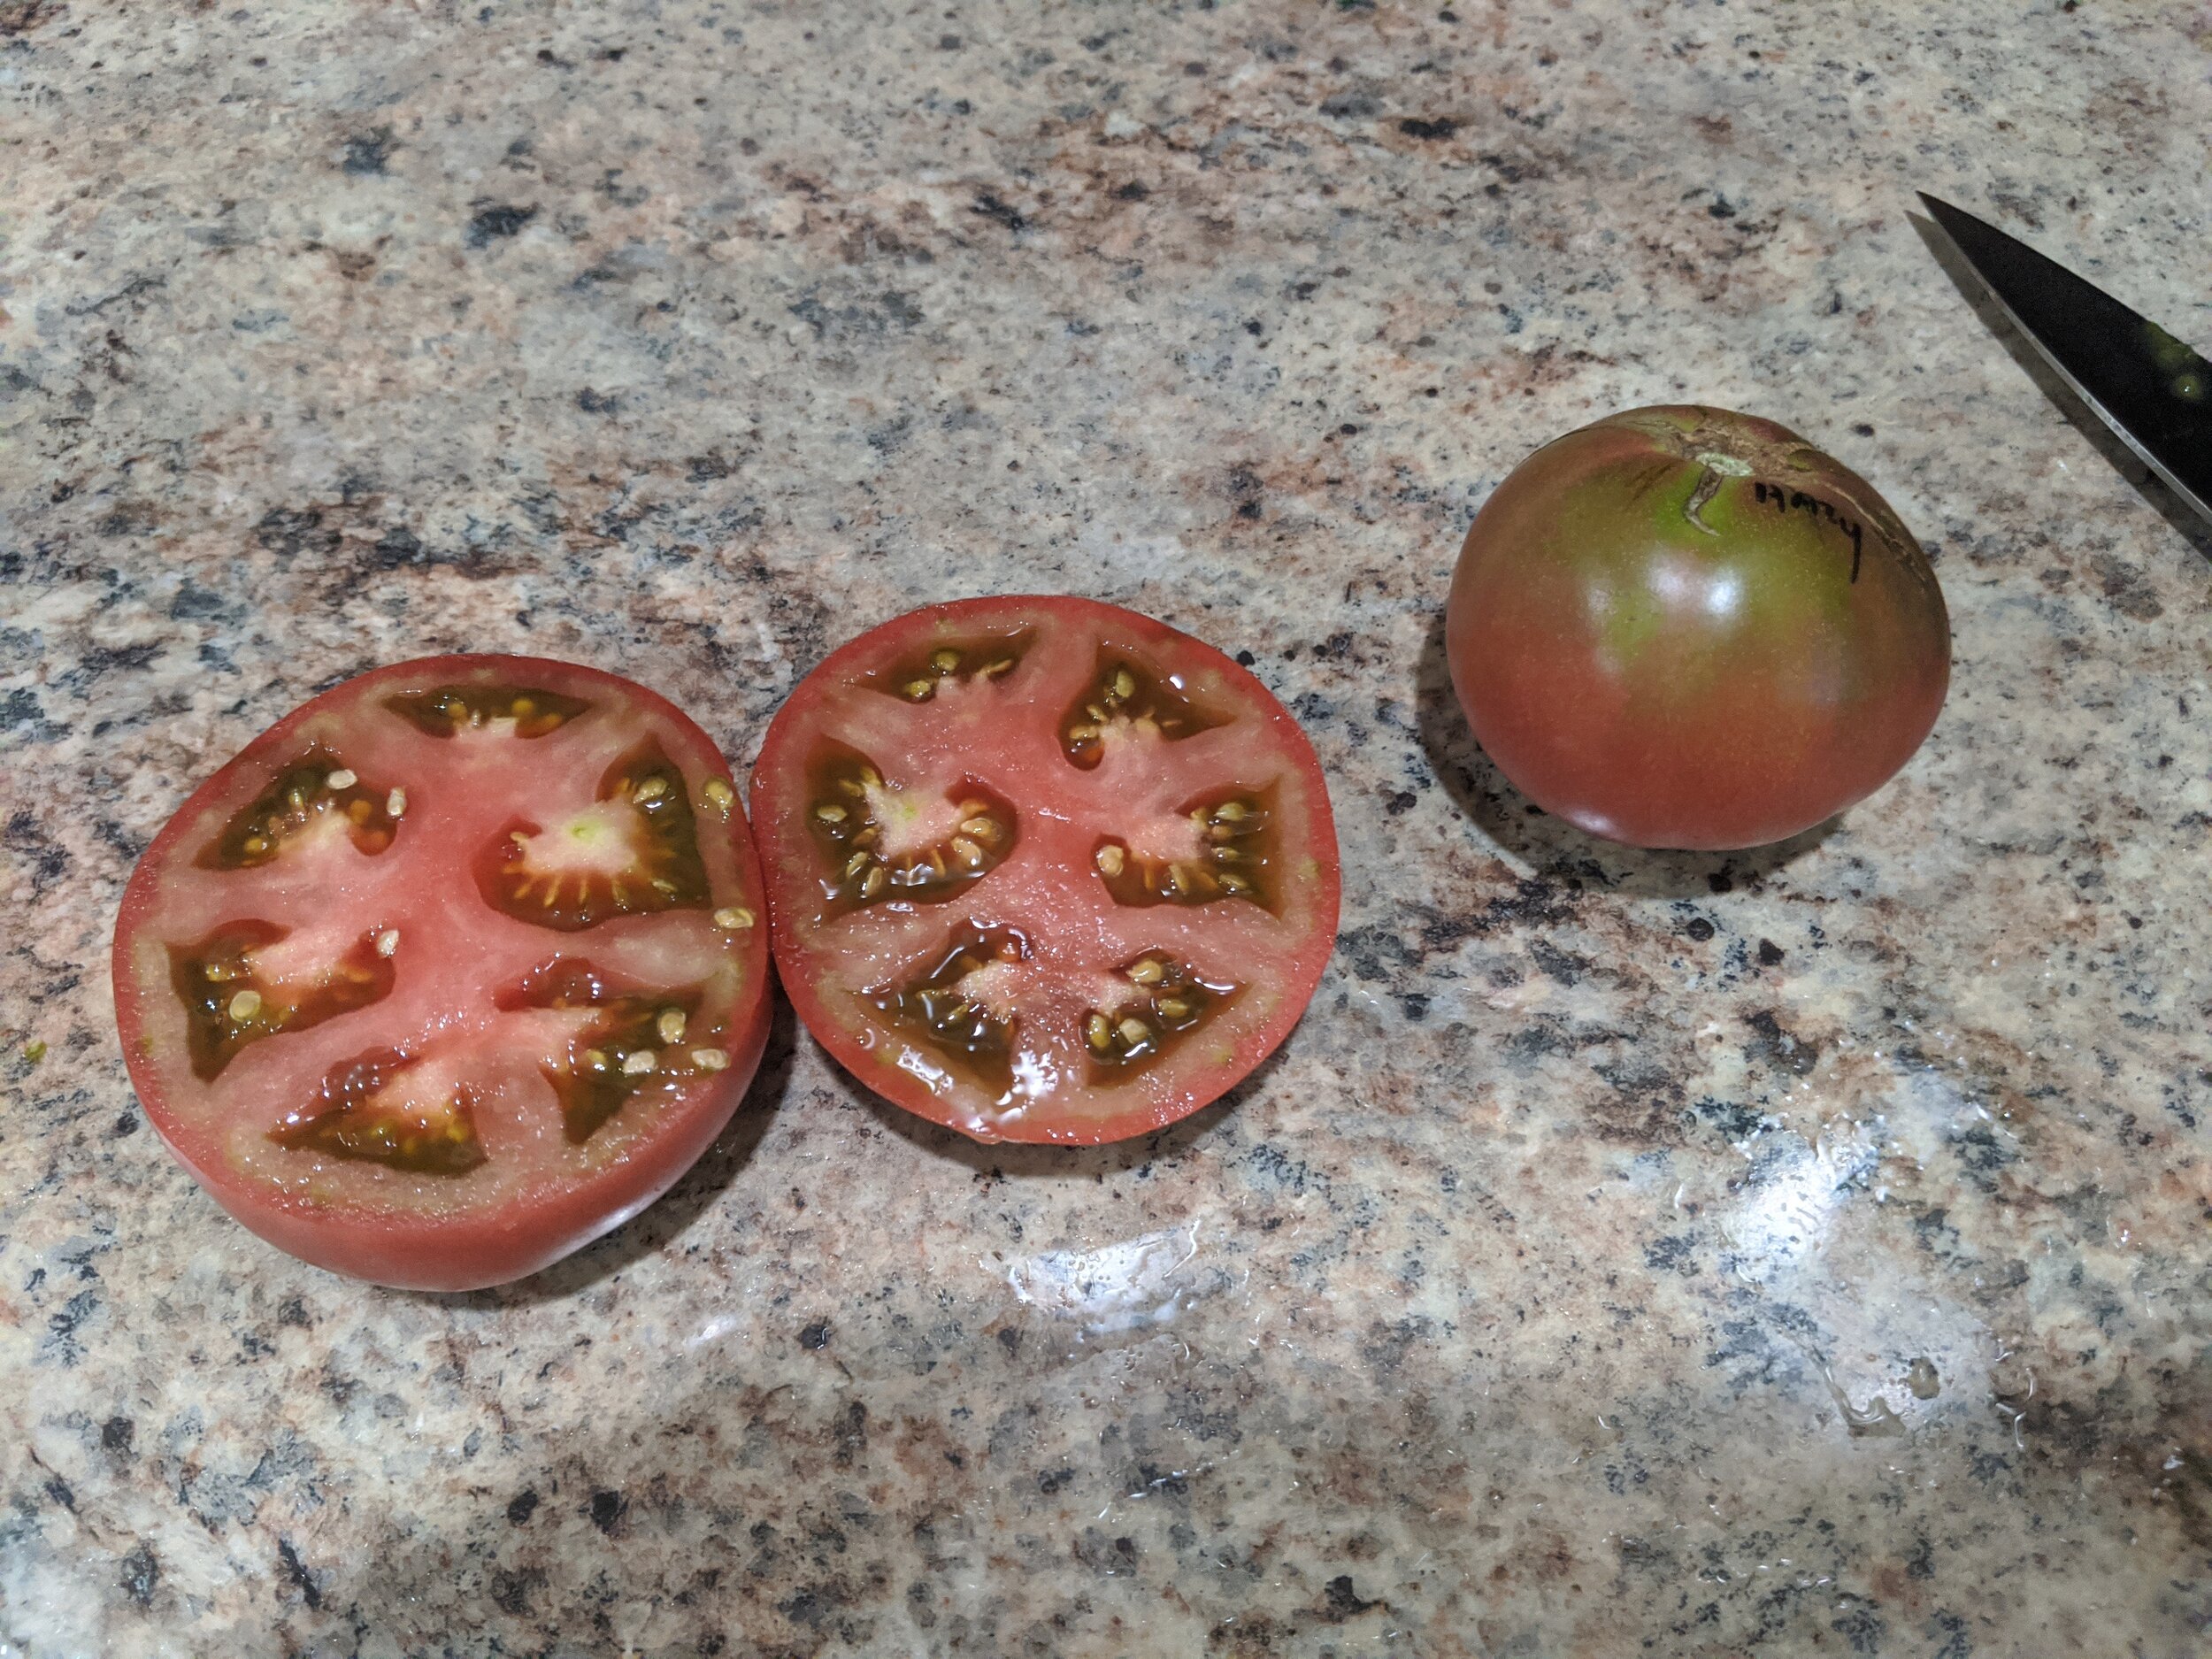 Desert Star Dwarf Tomato